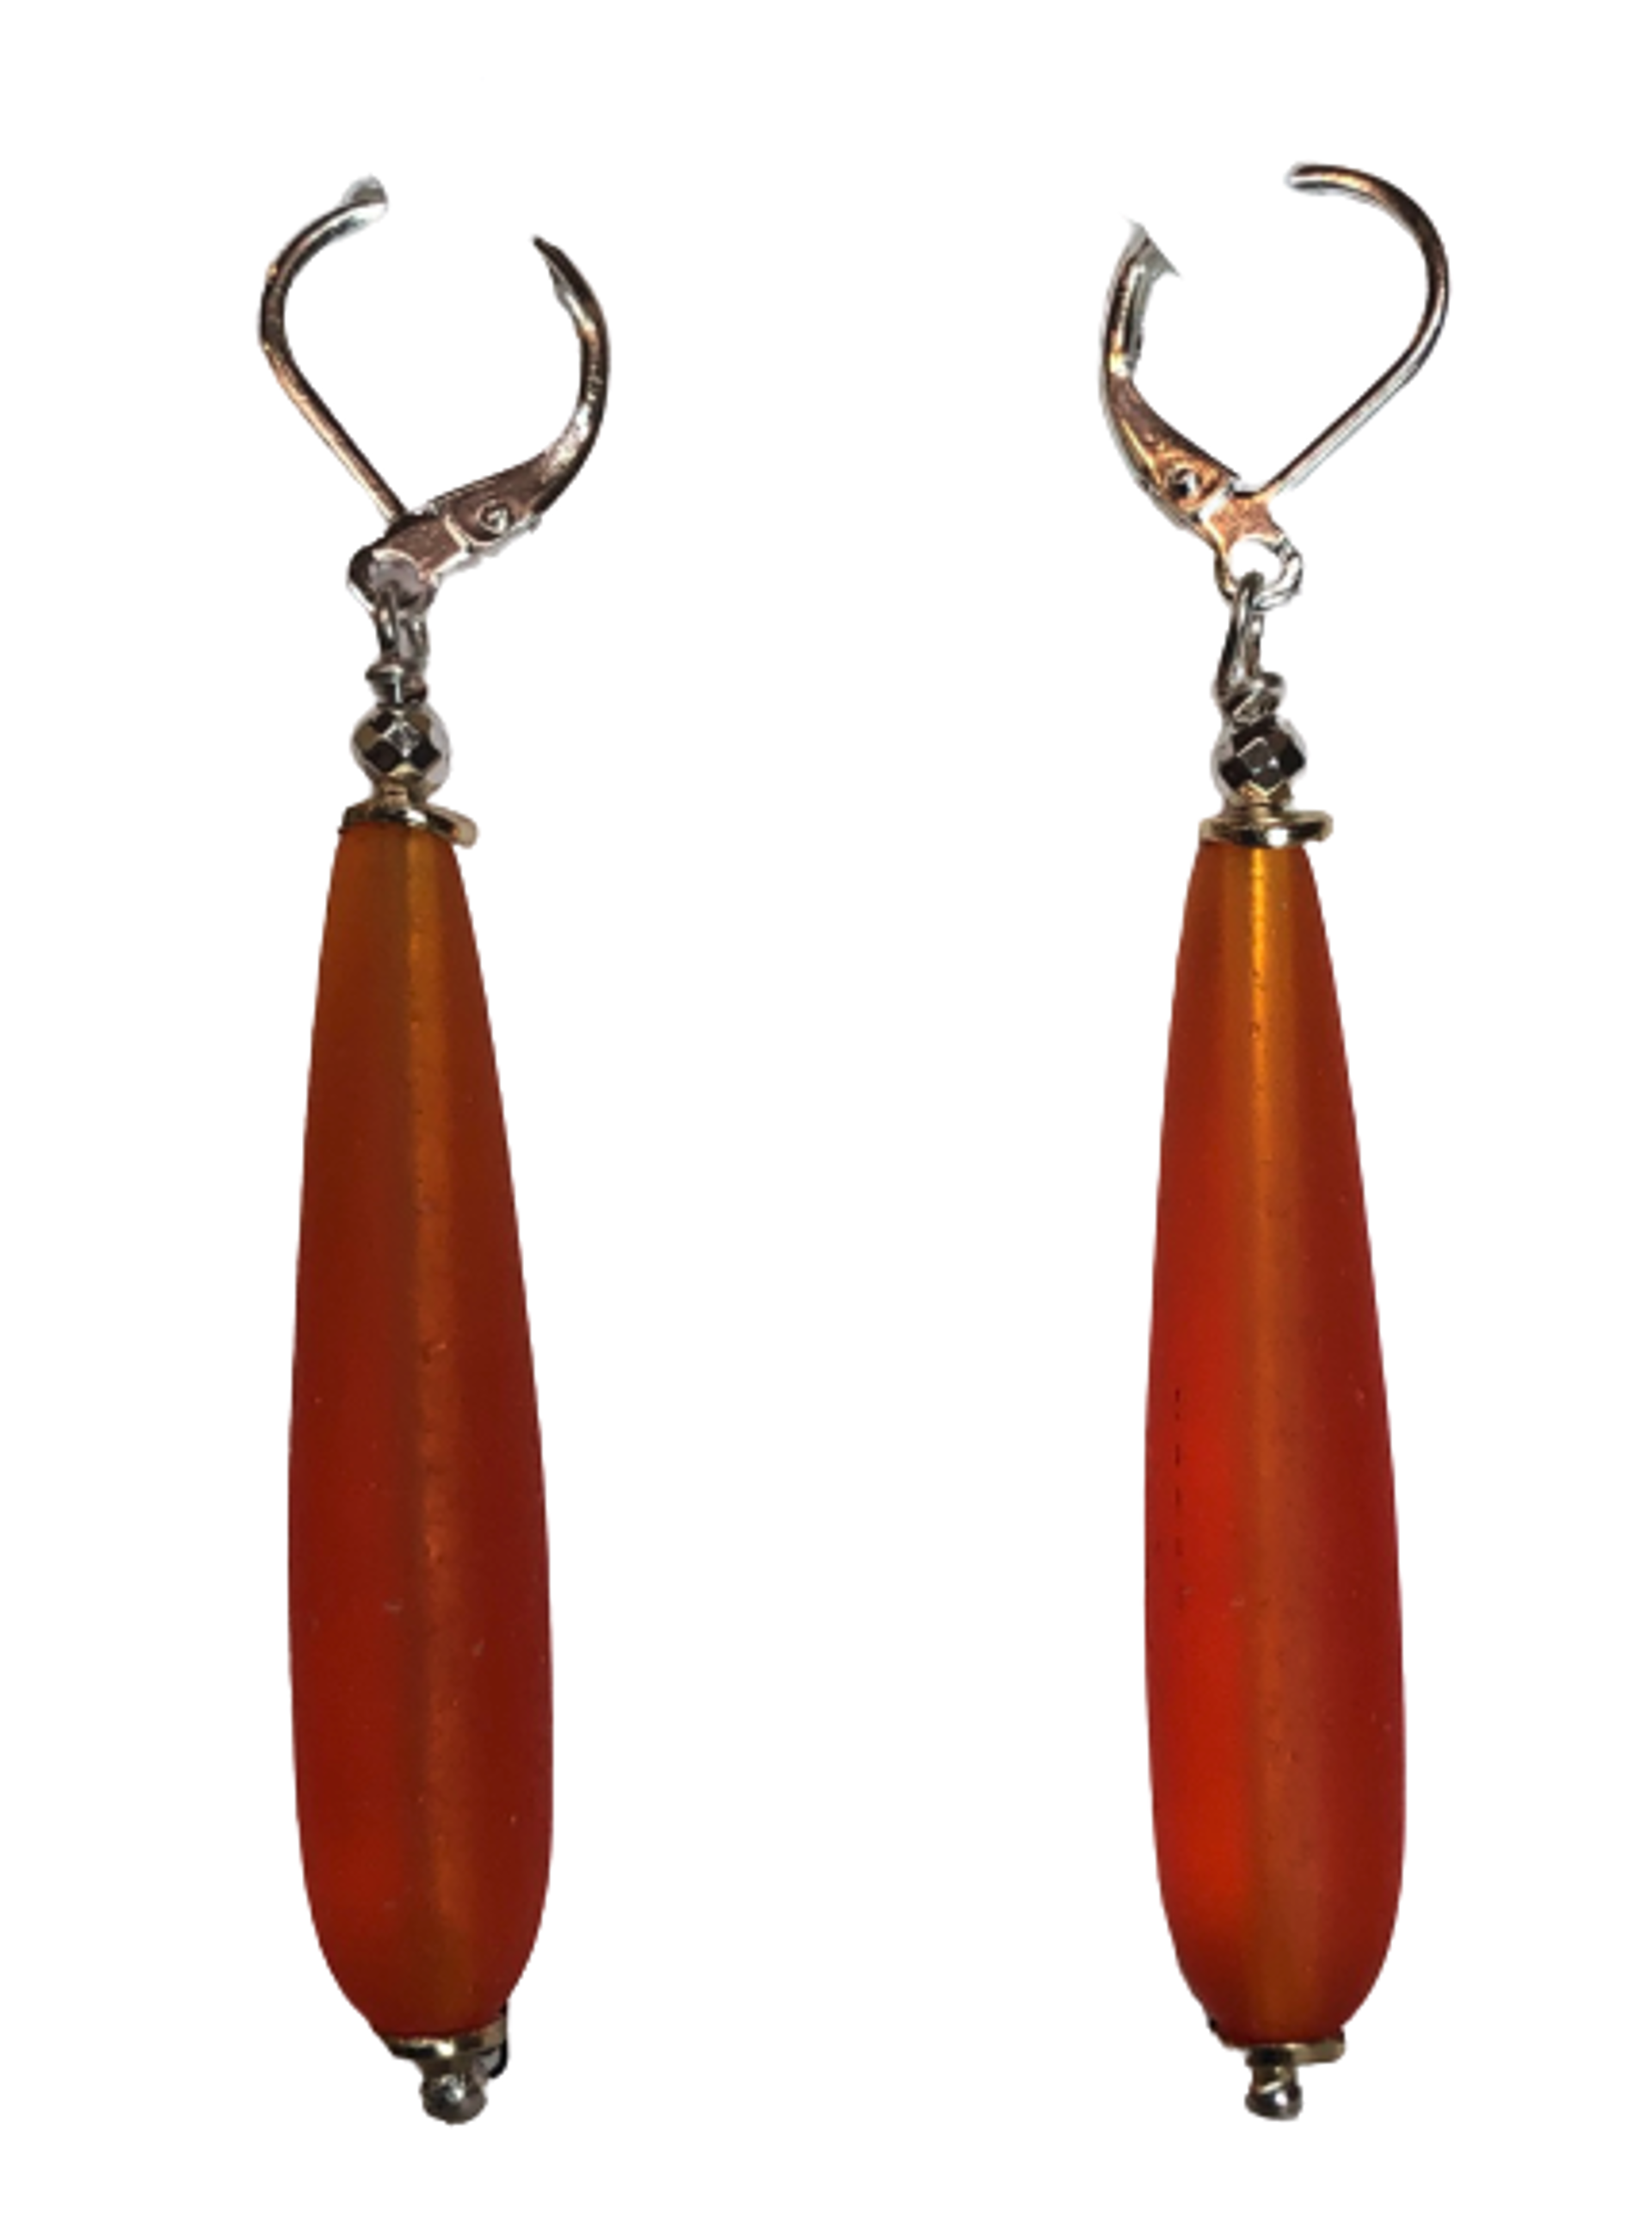 Earrings - Frost Me Orange - Frosted glass long drops 1.5 " -orange on sterling silver lever backs by Melissa Rogers